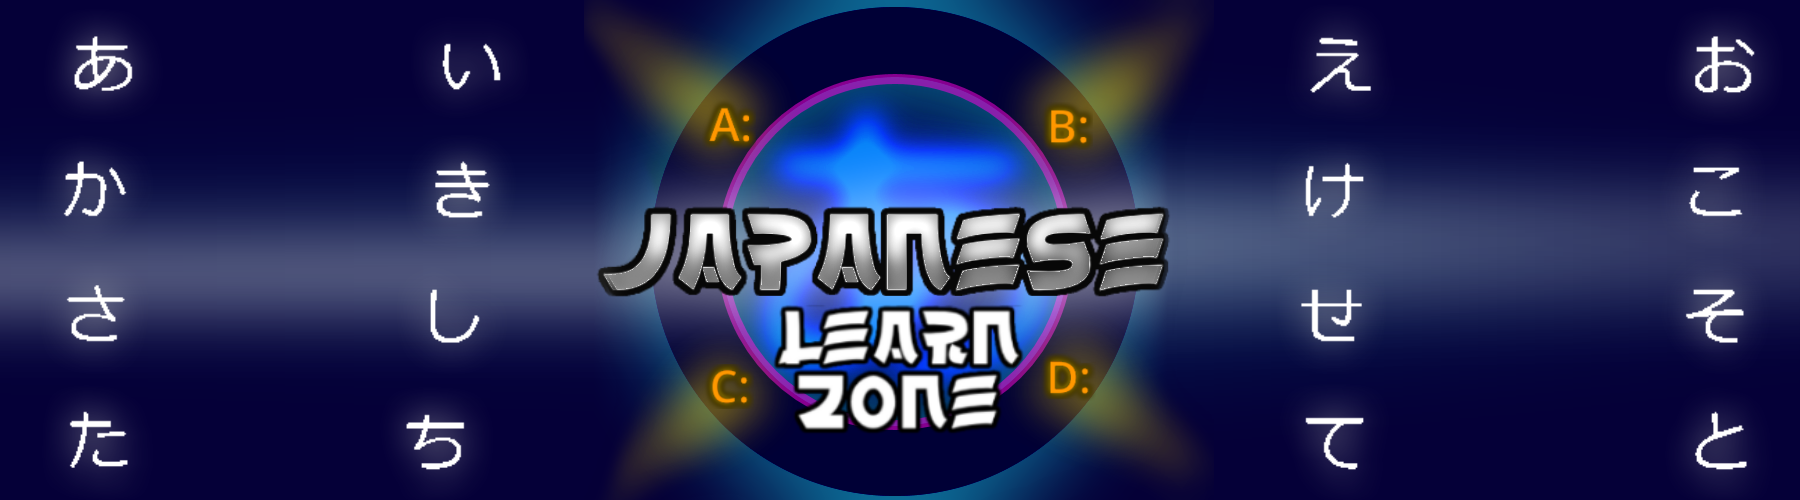 Japanese-Learn-Zone